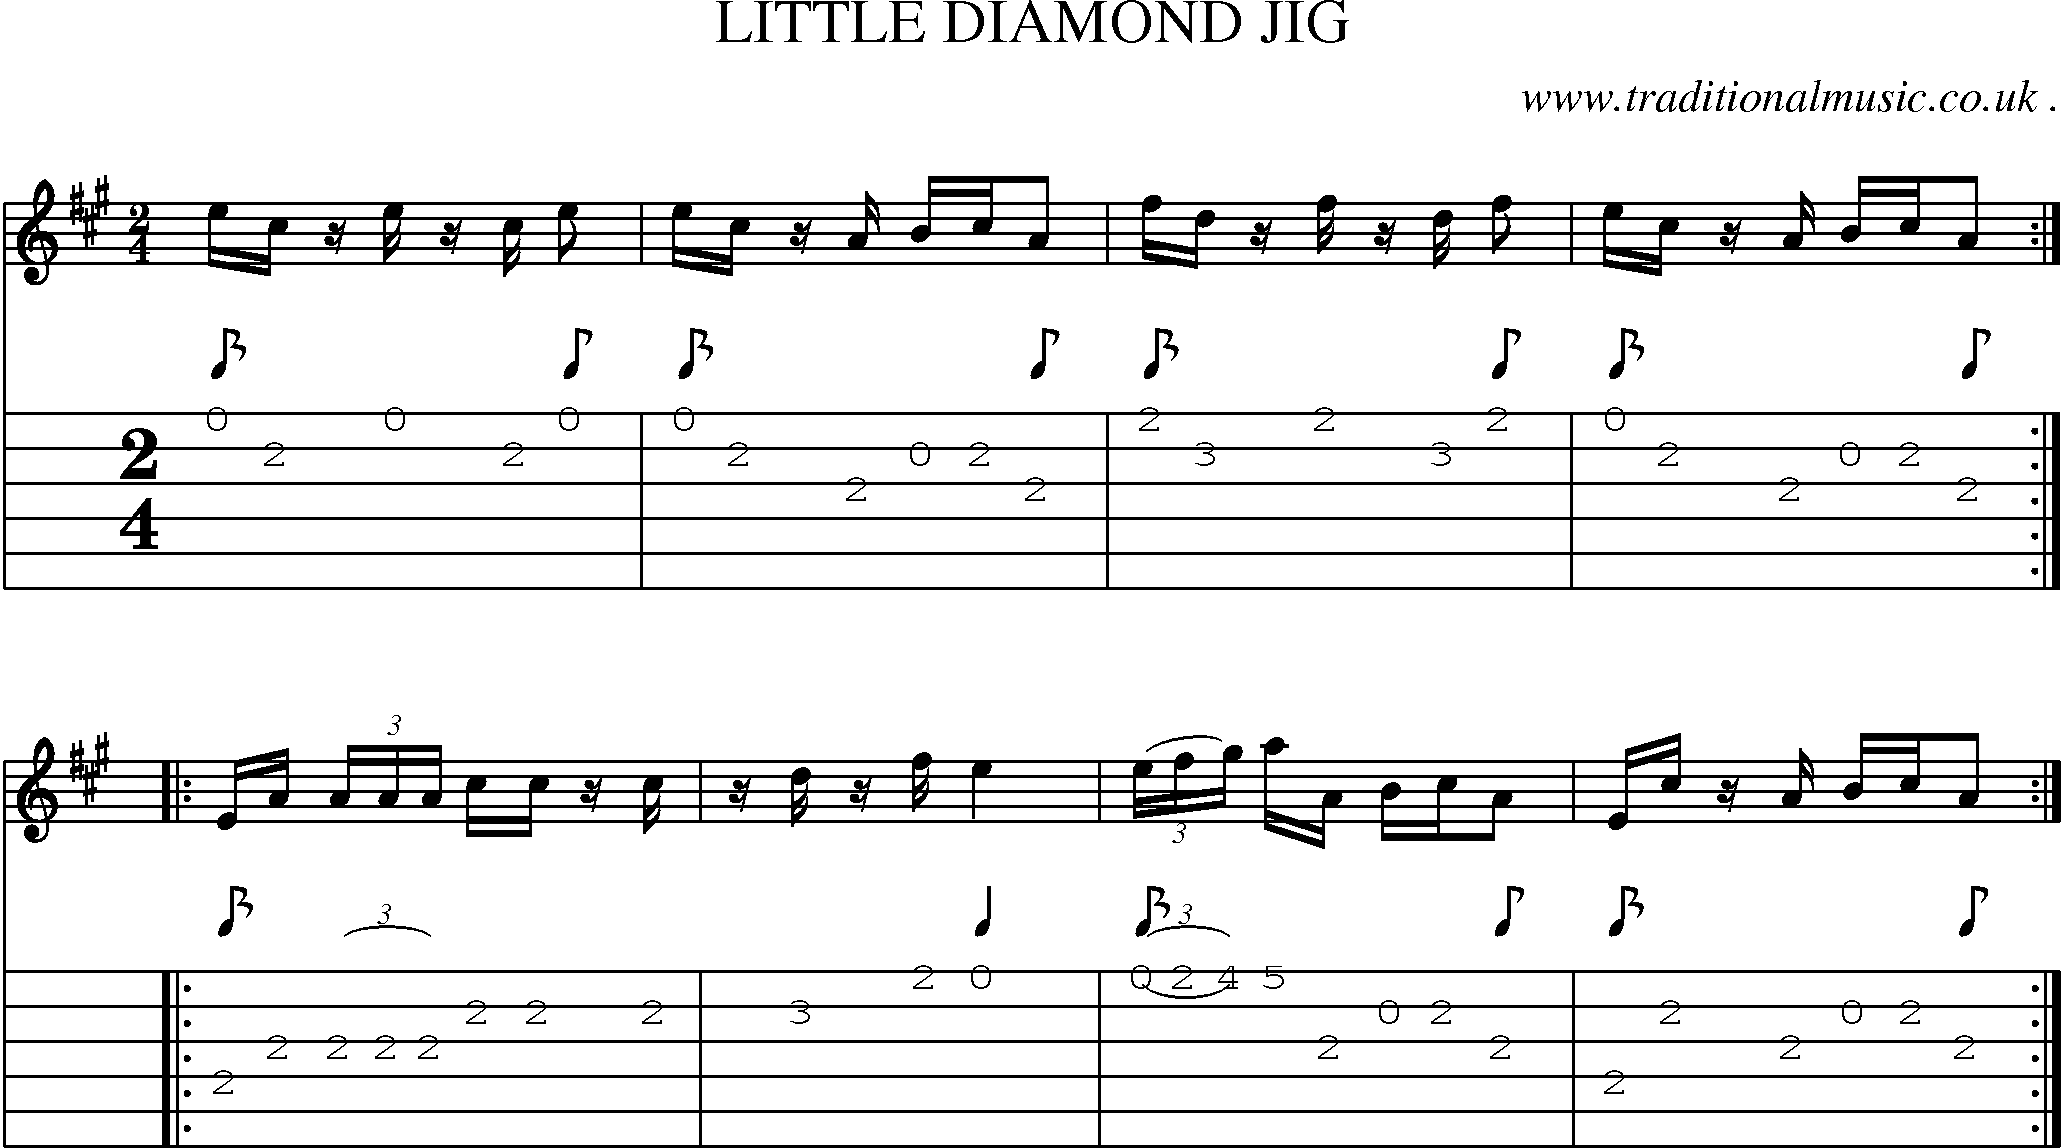 Sheet-Music and Guitar Tabs for Little Diamond Jig